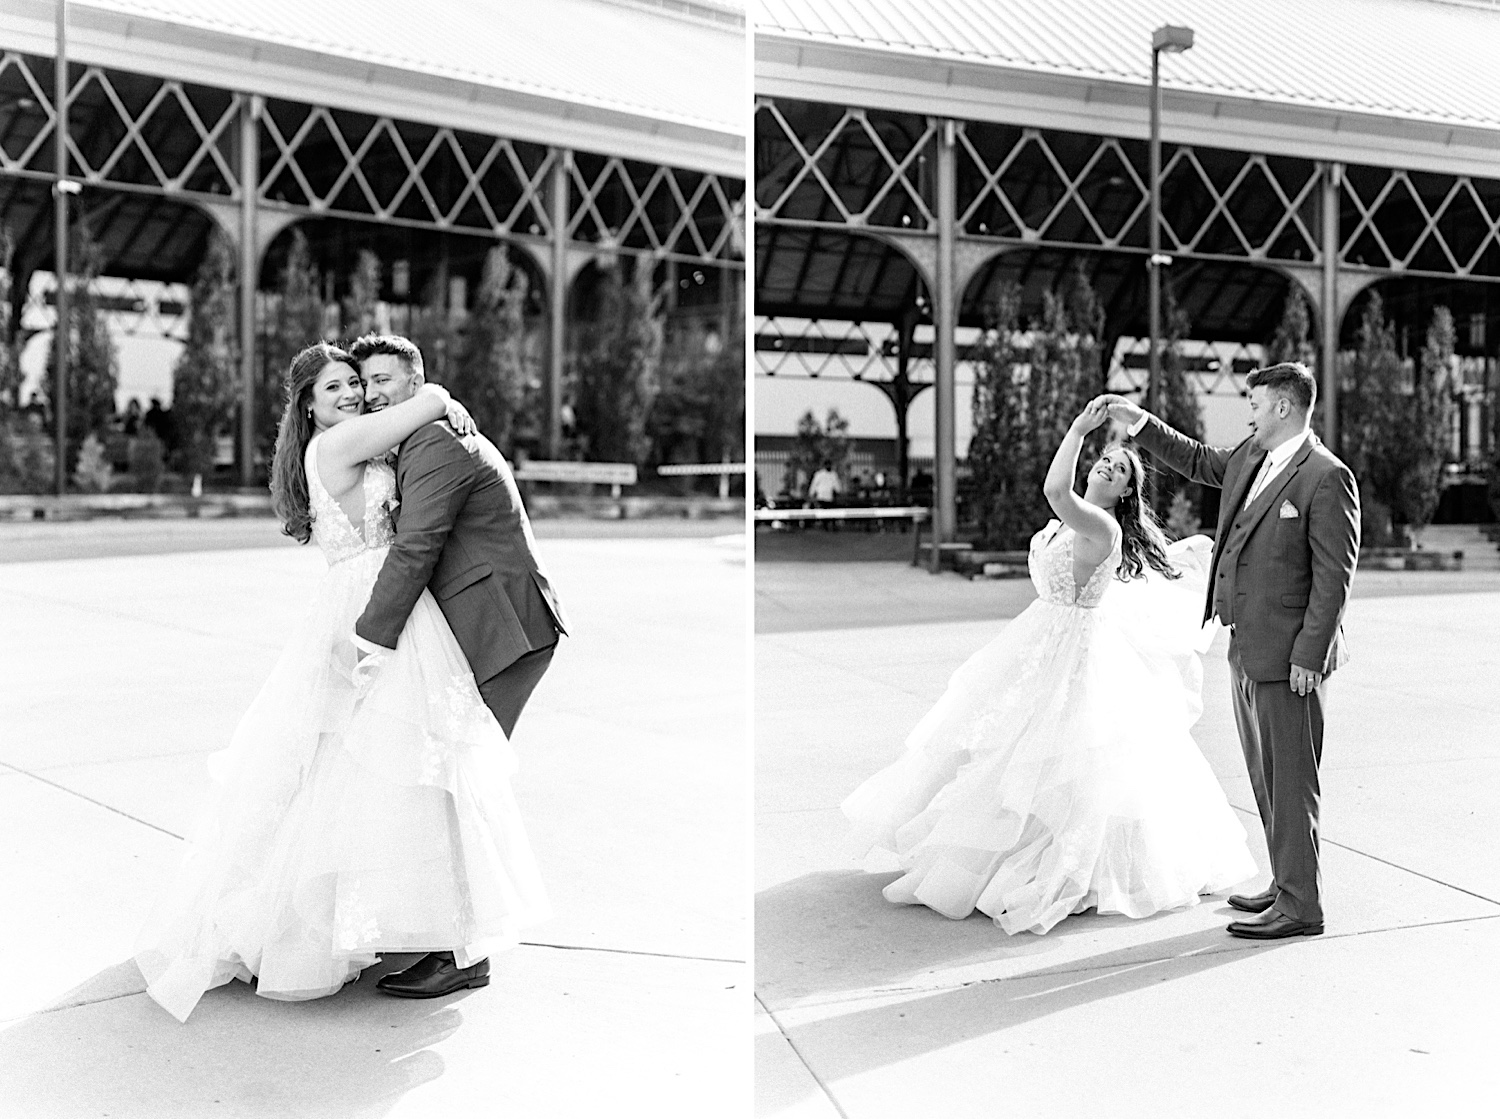 Stunning wedding at The Depot at Minneapolis Renaissance Hotel